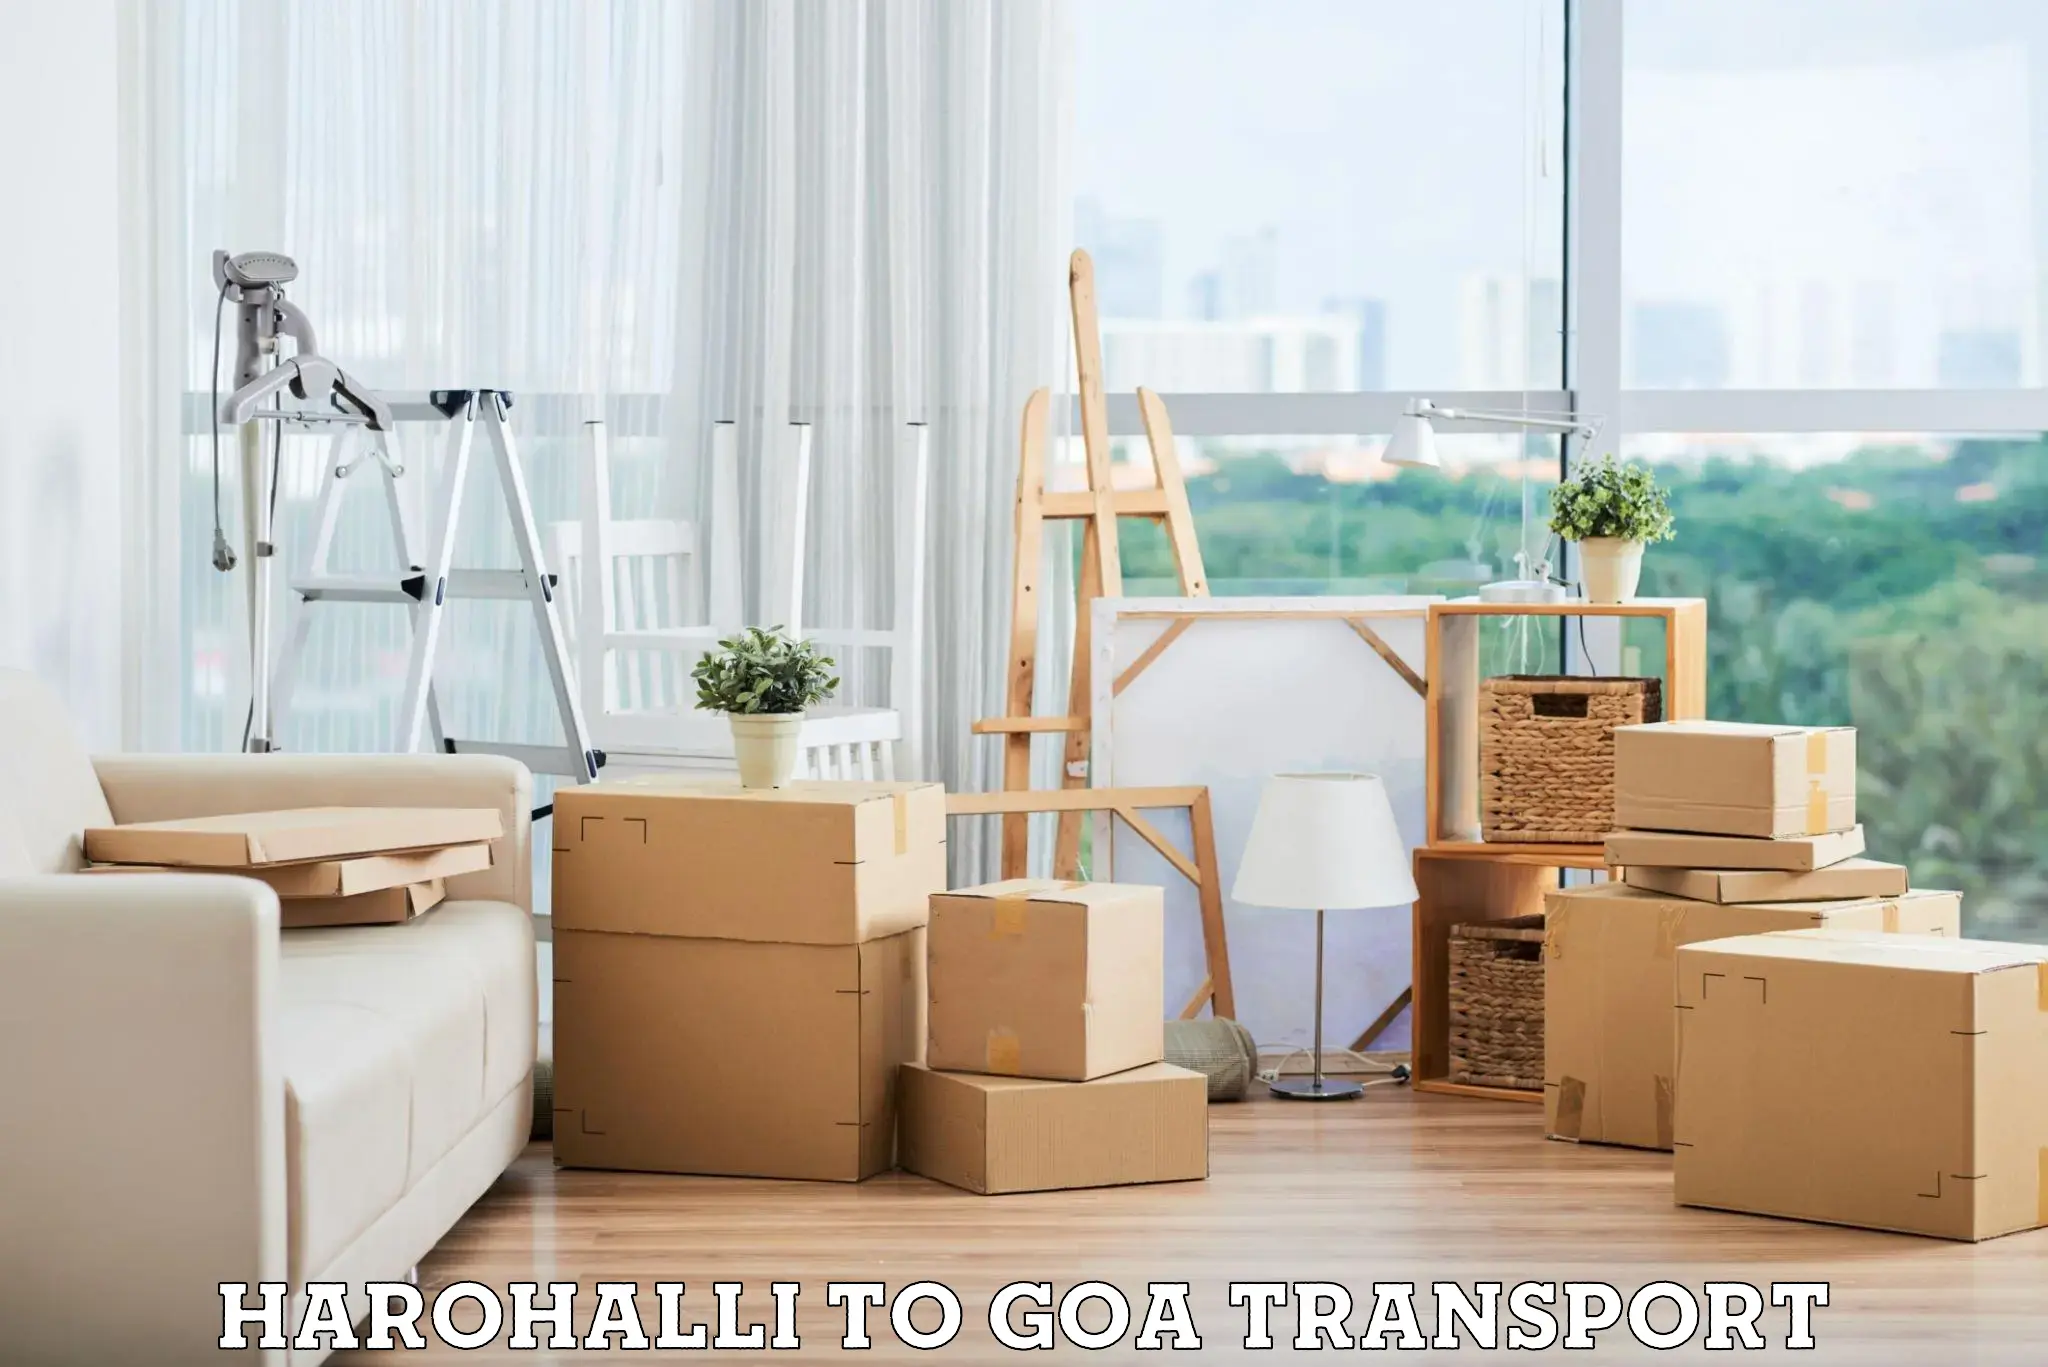 Daily transport service Harohalli to Goa University